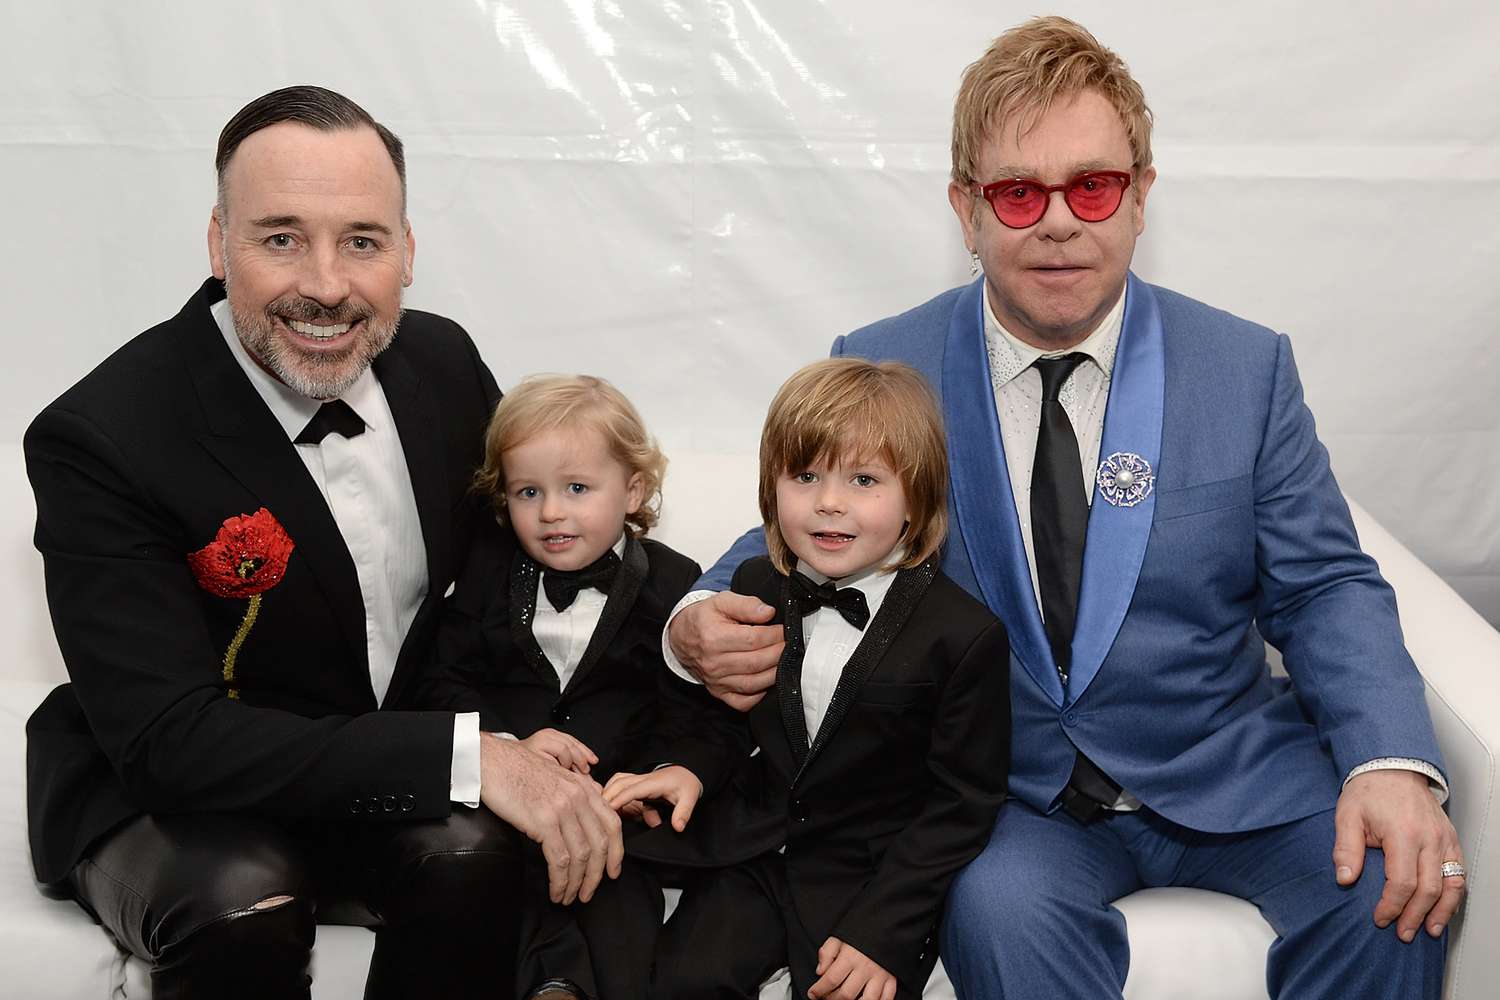 David Furnish, Elijah Furnish-John, Zachary Furnish-John, and Sir Elton John attend the 23rd Annual Elton John AIDS Foundation Academy Awards Viewing Party on February 22, 2015 in Los Angeles, California. 